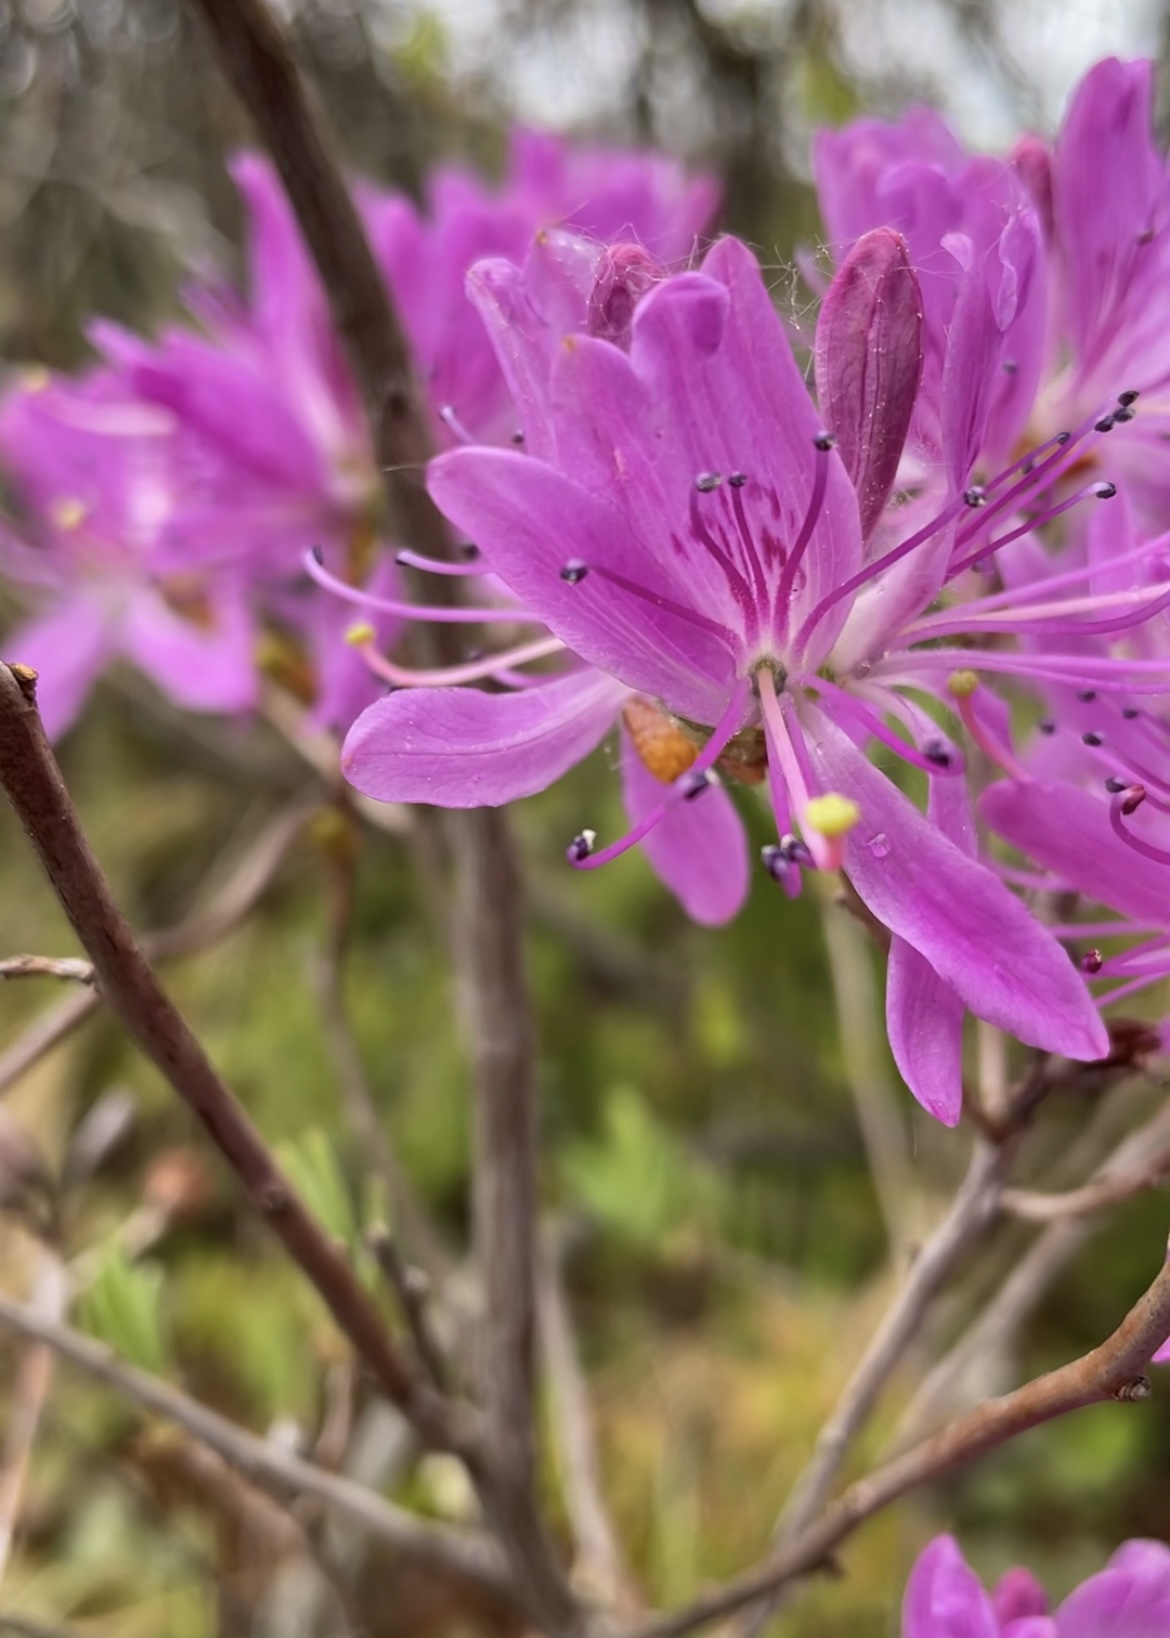 Rhodora in bloom along the Walking Trail at Killarney Lake in Fredericton.